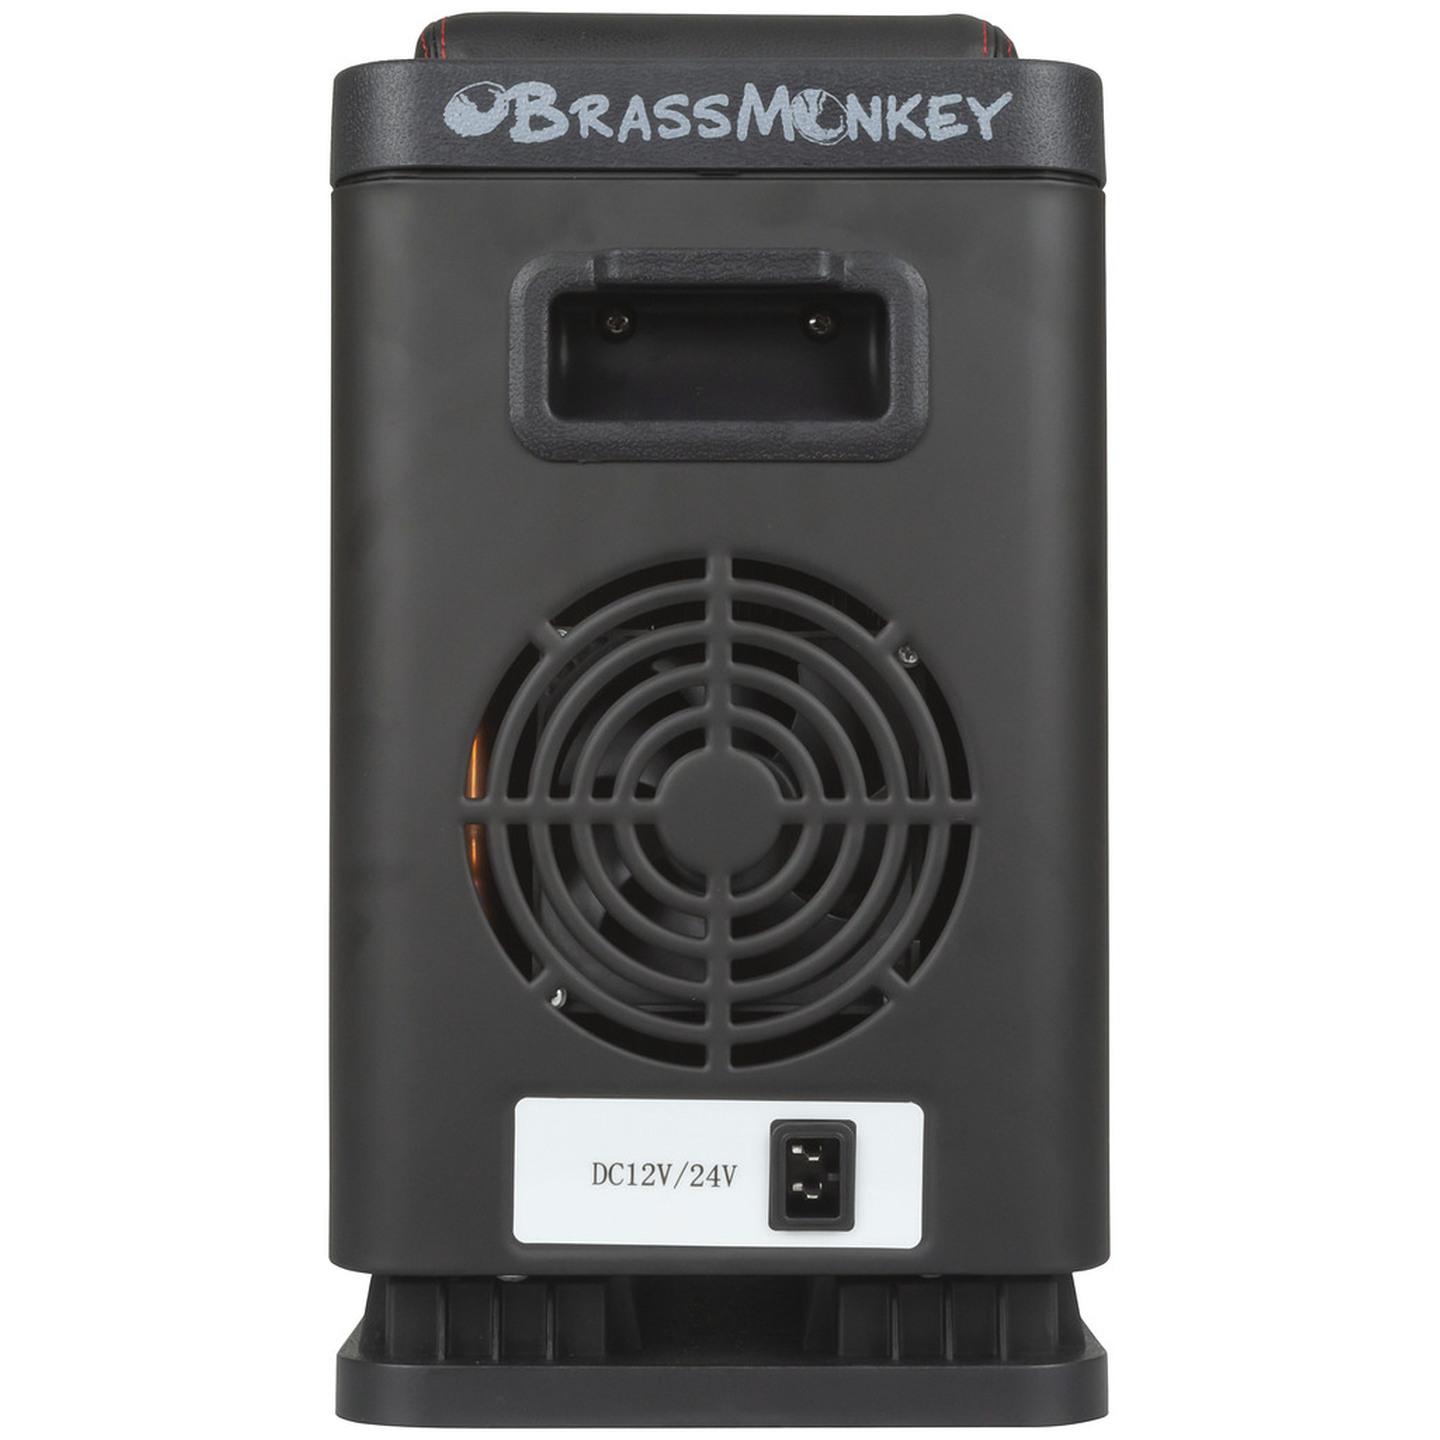 8L Brass Monkey Fridge/Freezer with QI Wireless Charger